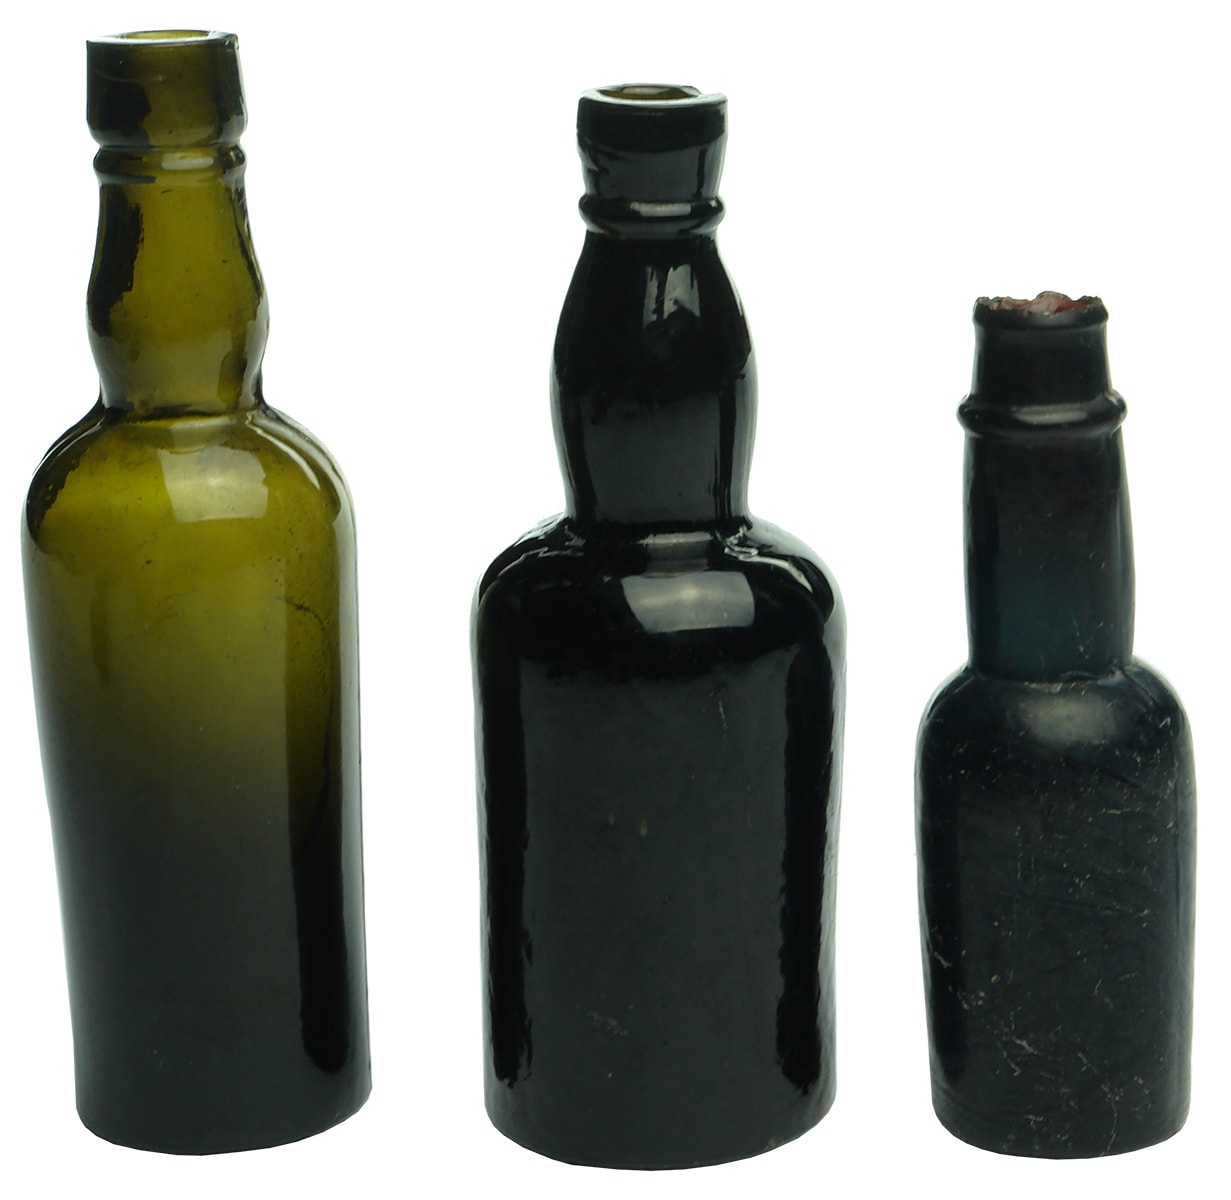 Three sample black glass bottles